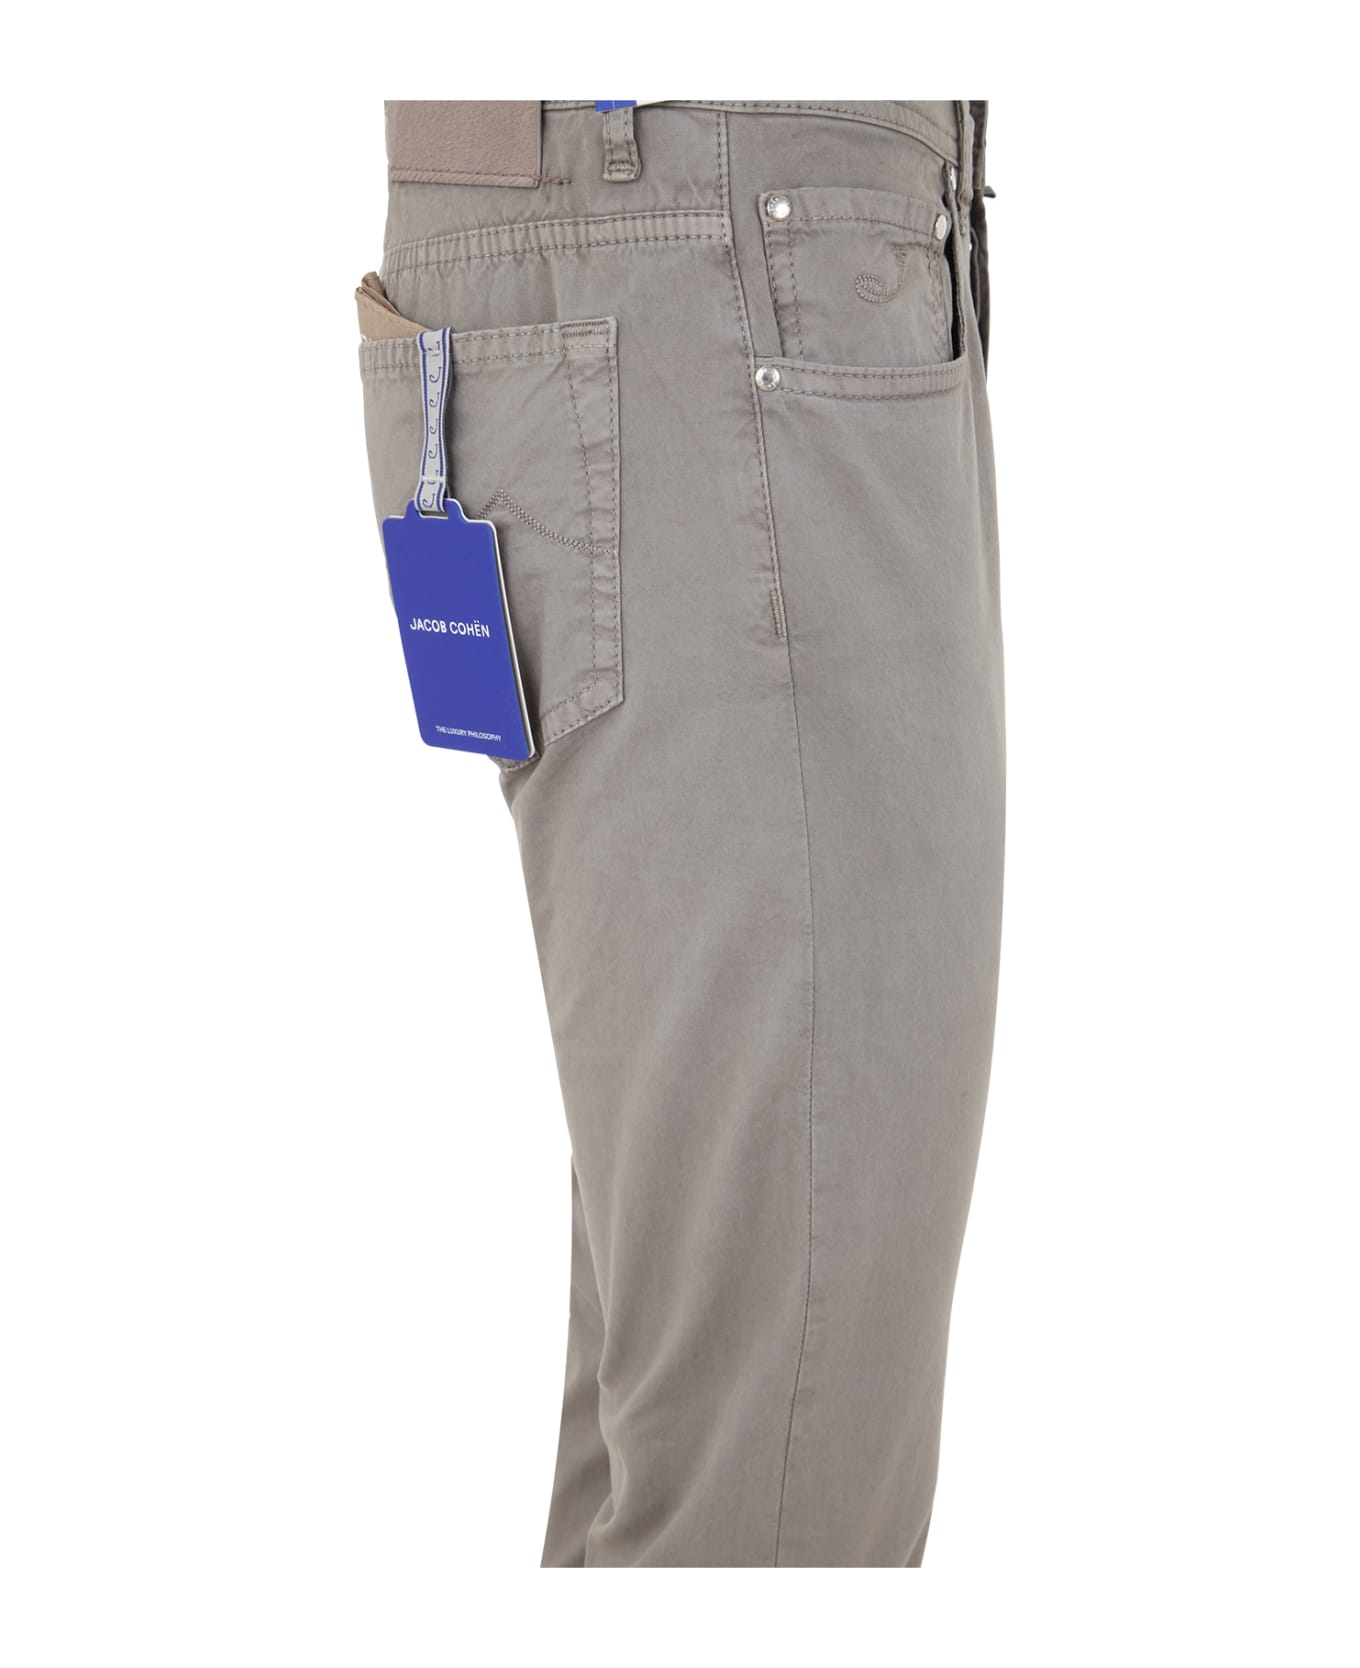 Jacob Cohen Bard Slim Fit Five Pocket Jeans - Elephant Grey